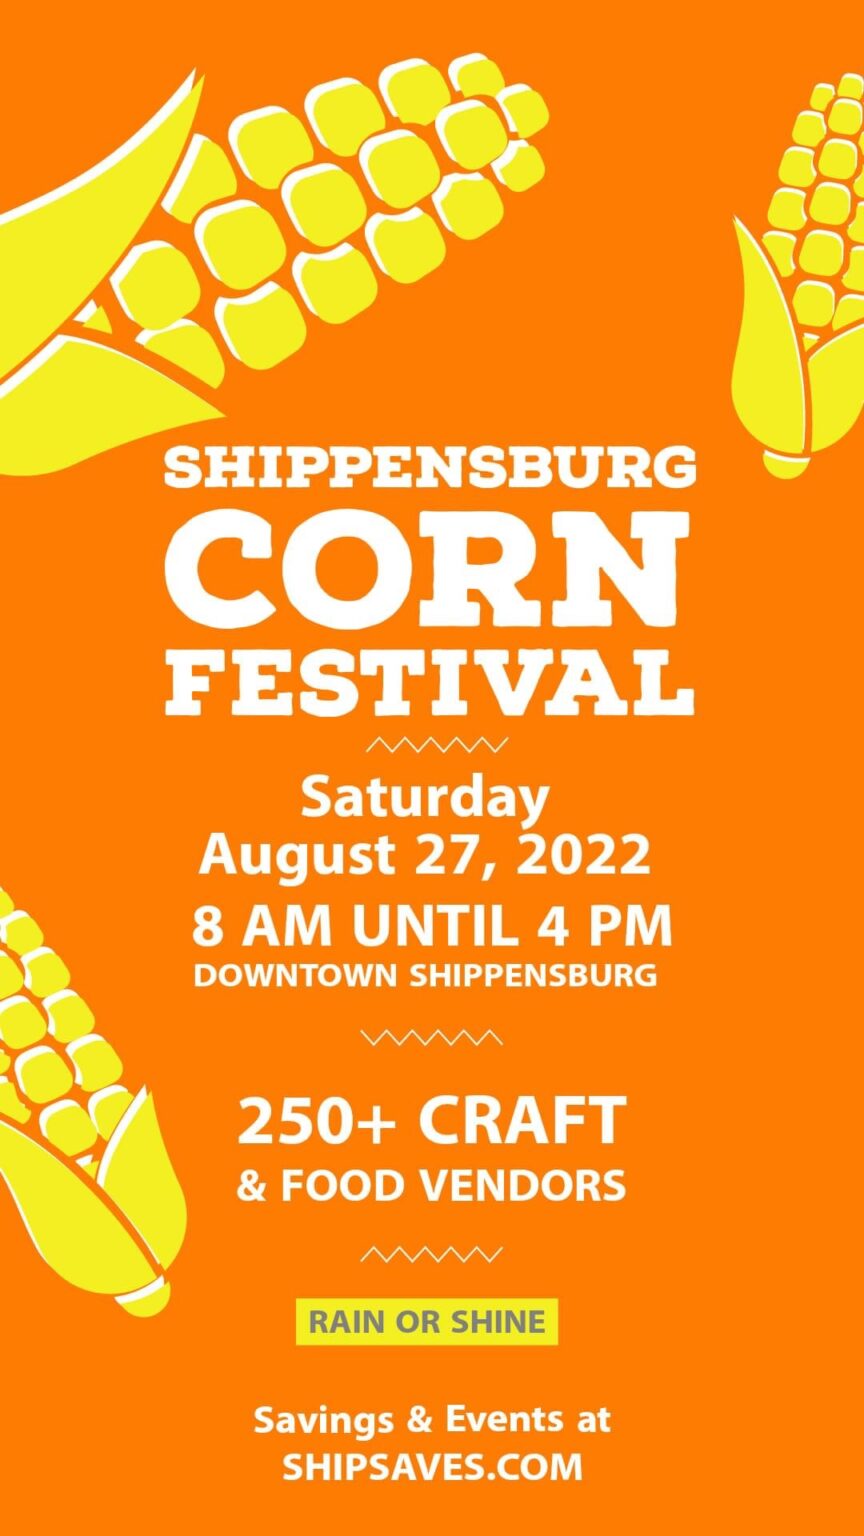 Shippensburg Corn Festival August 27 SHIP SAVES